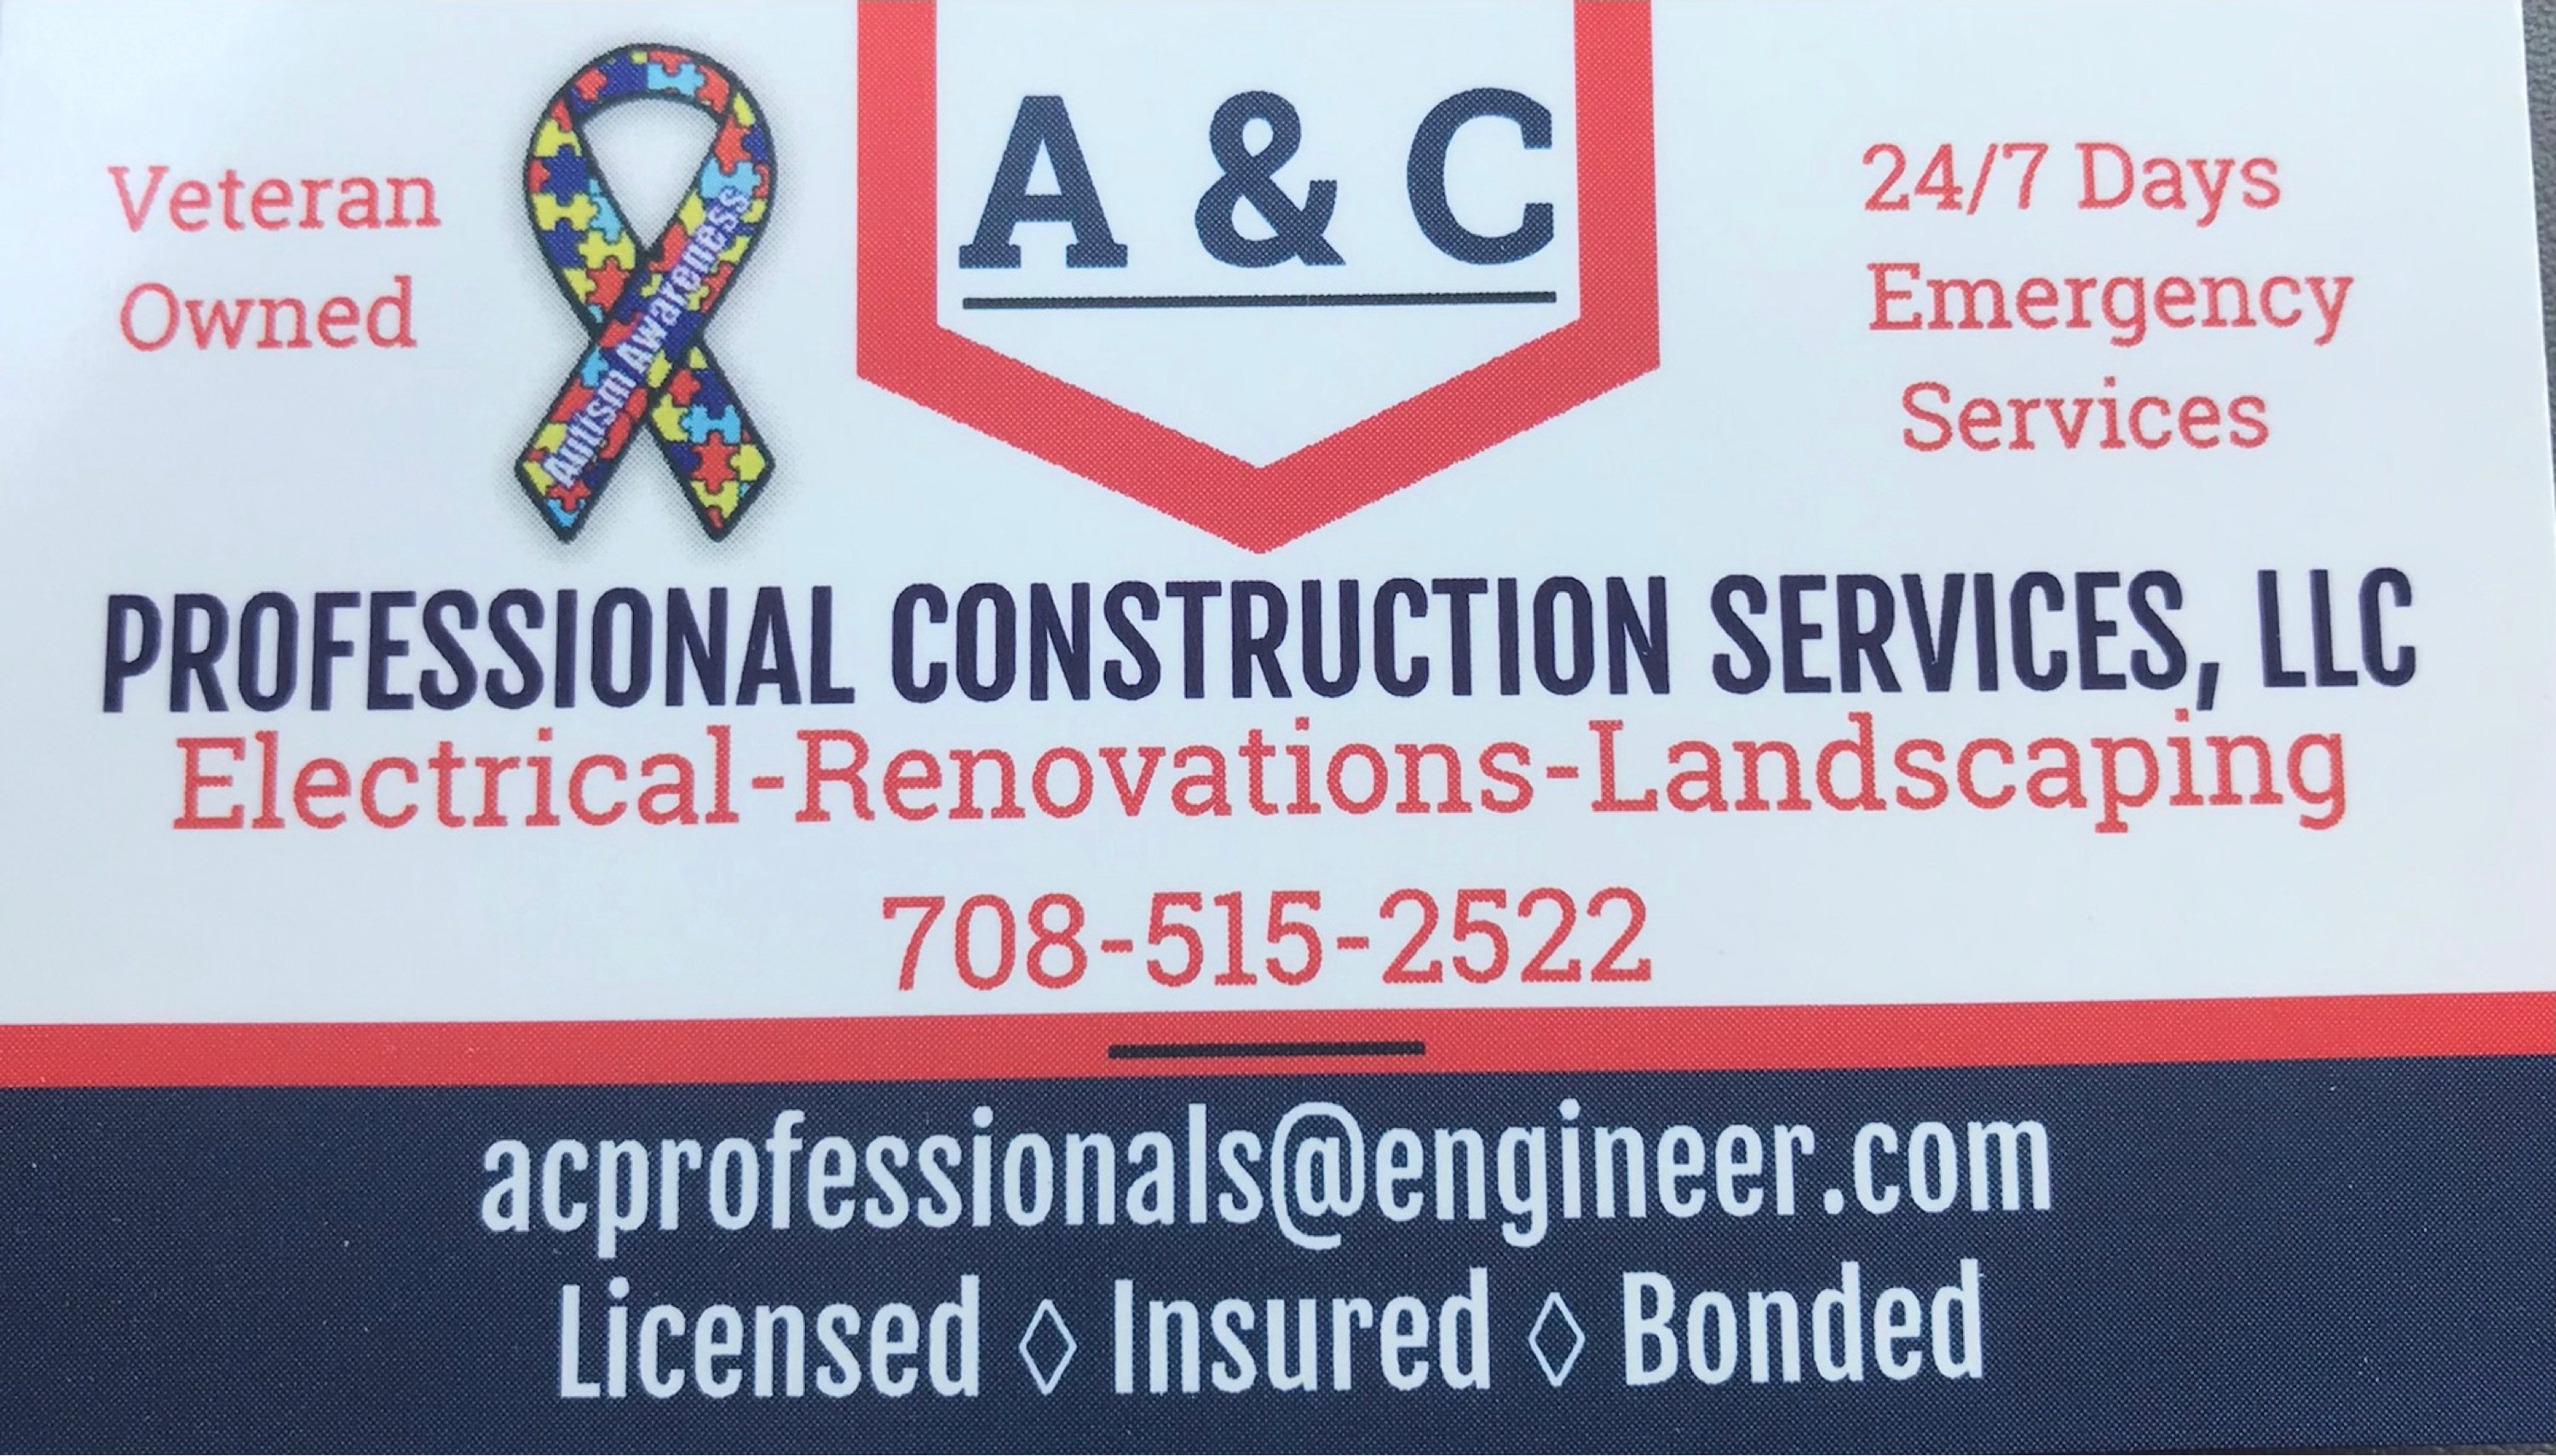 A&C Professional Construction Services, LLC Logo